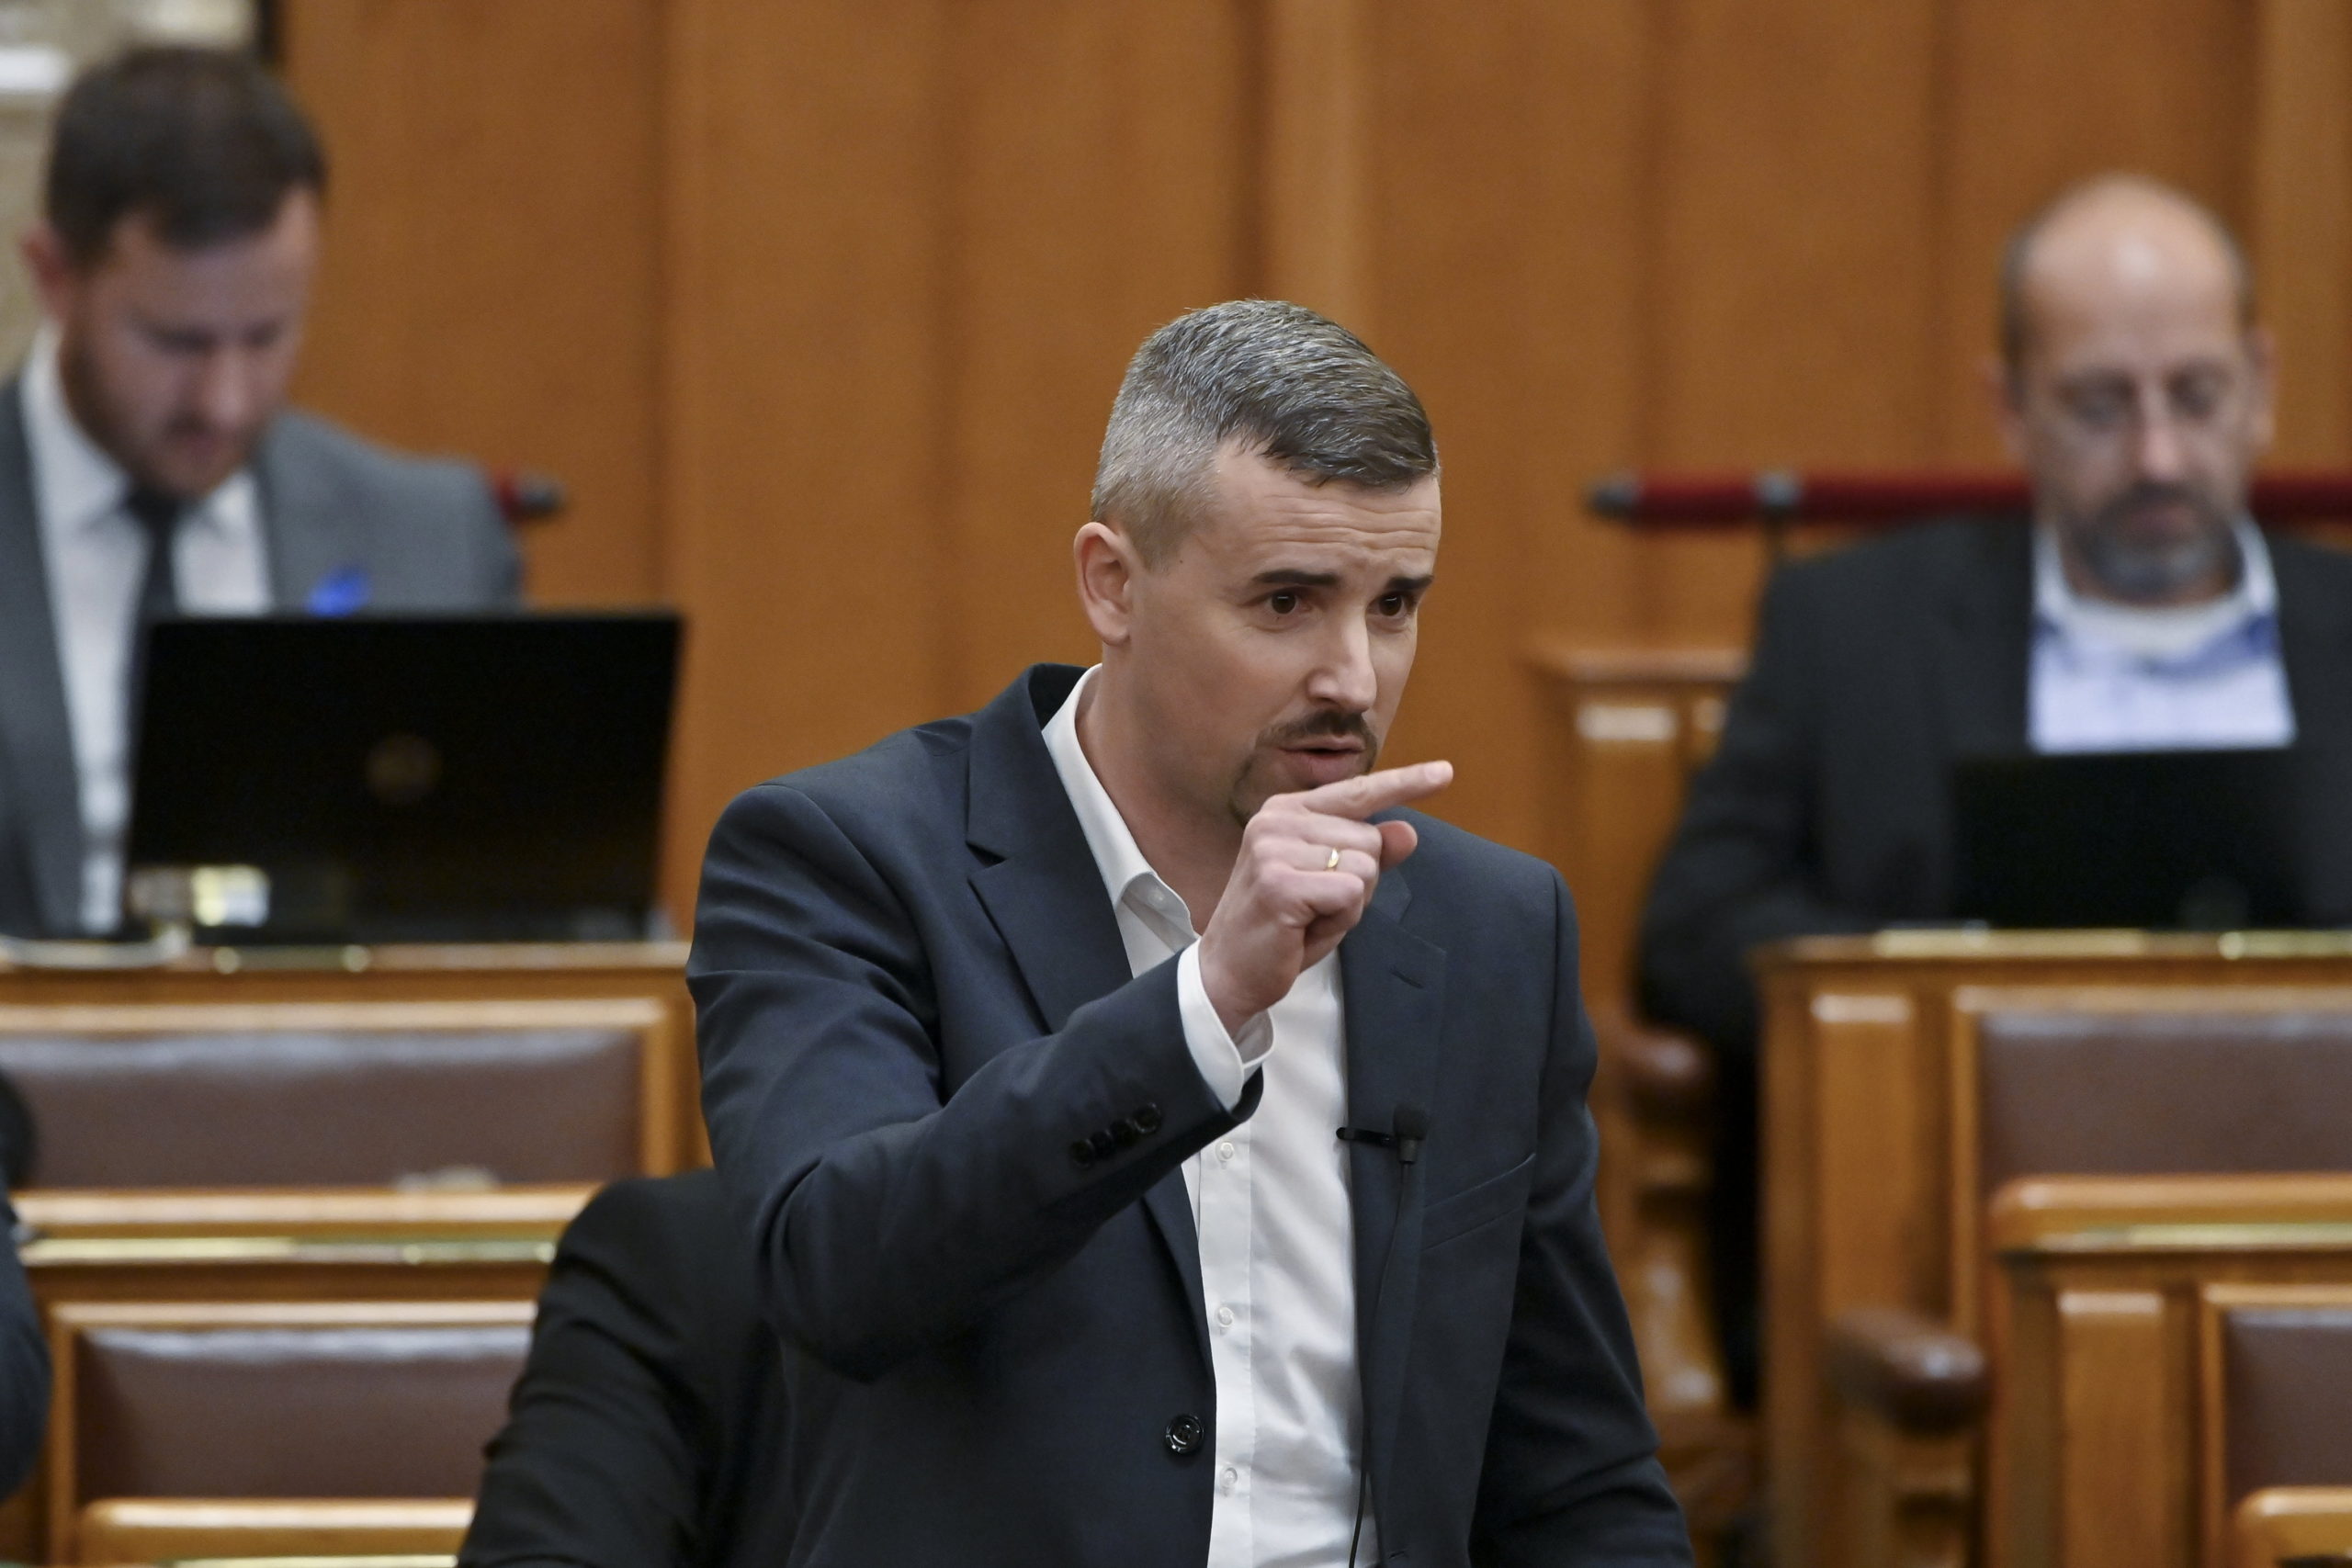 Márki-Zay Responsible for Hungary’s Opposition Defeat, Says Jobbik Leader